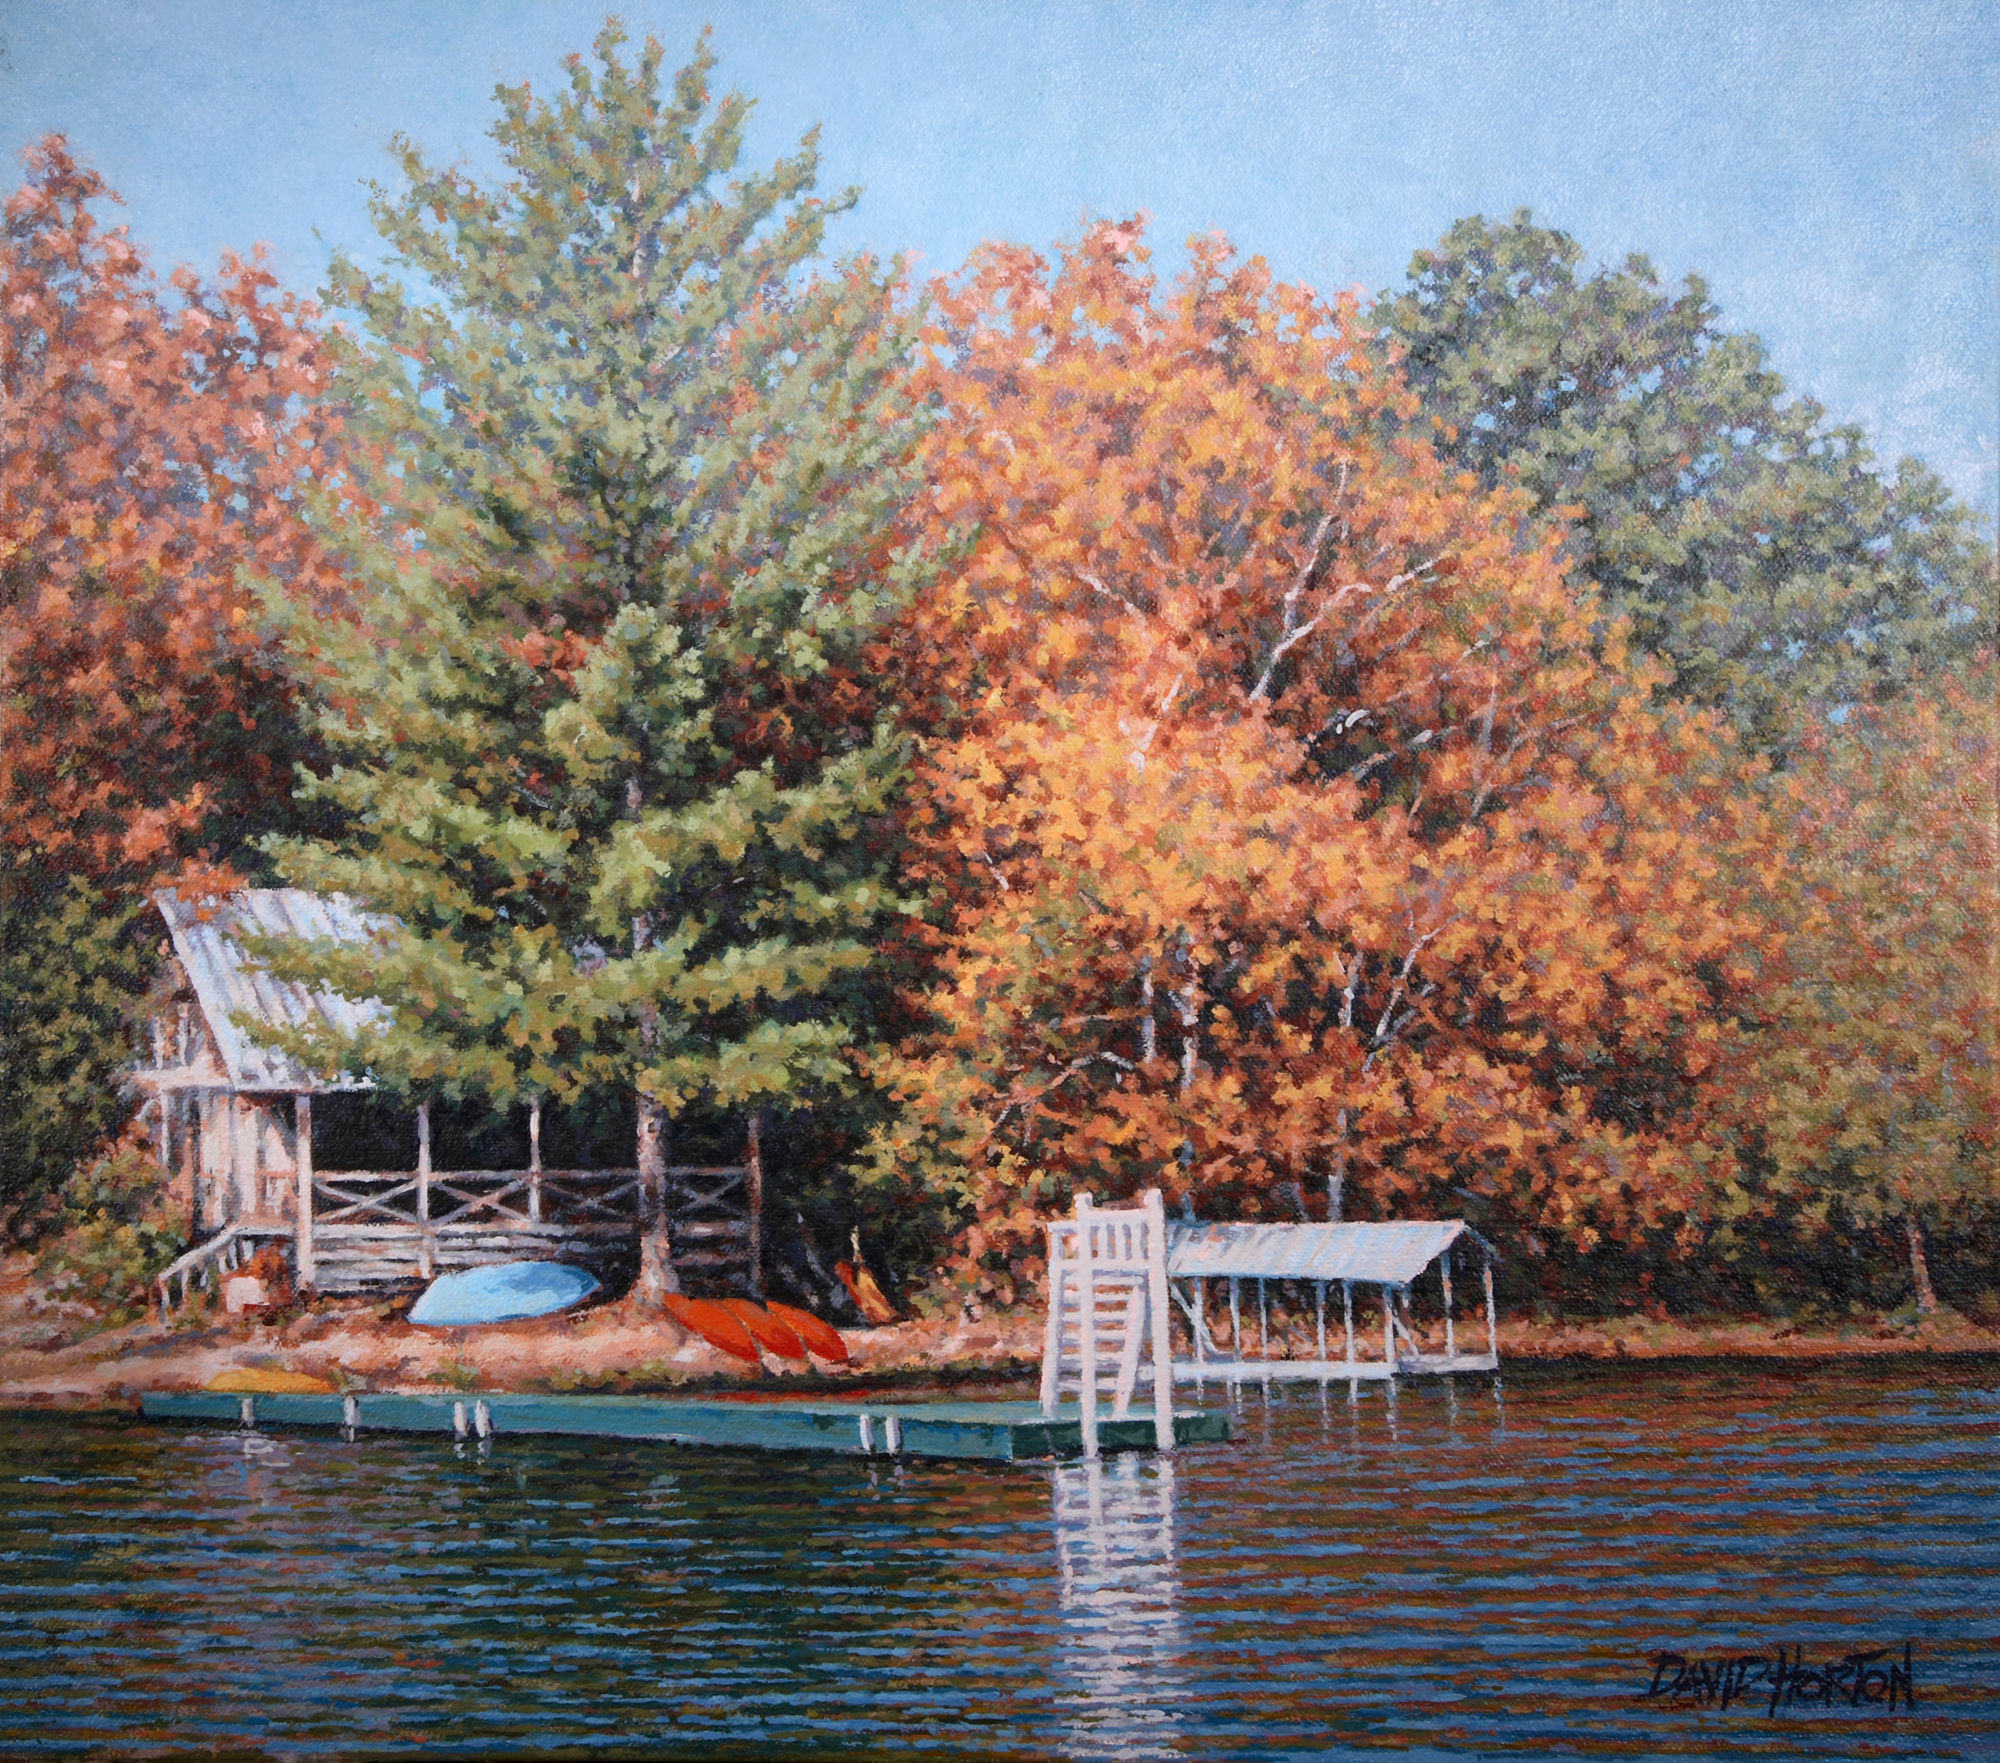 Camp Cherokee, Lake Burton, Georgia